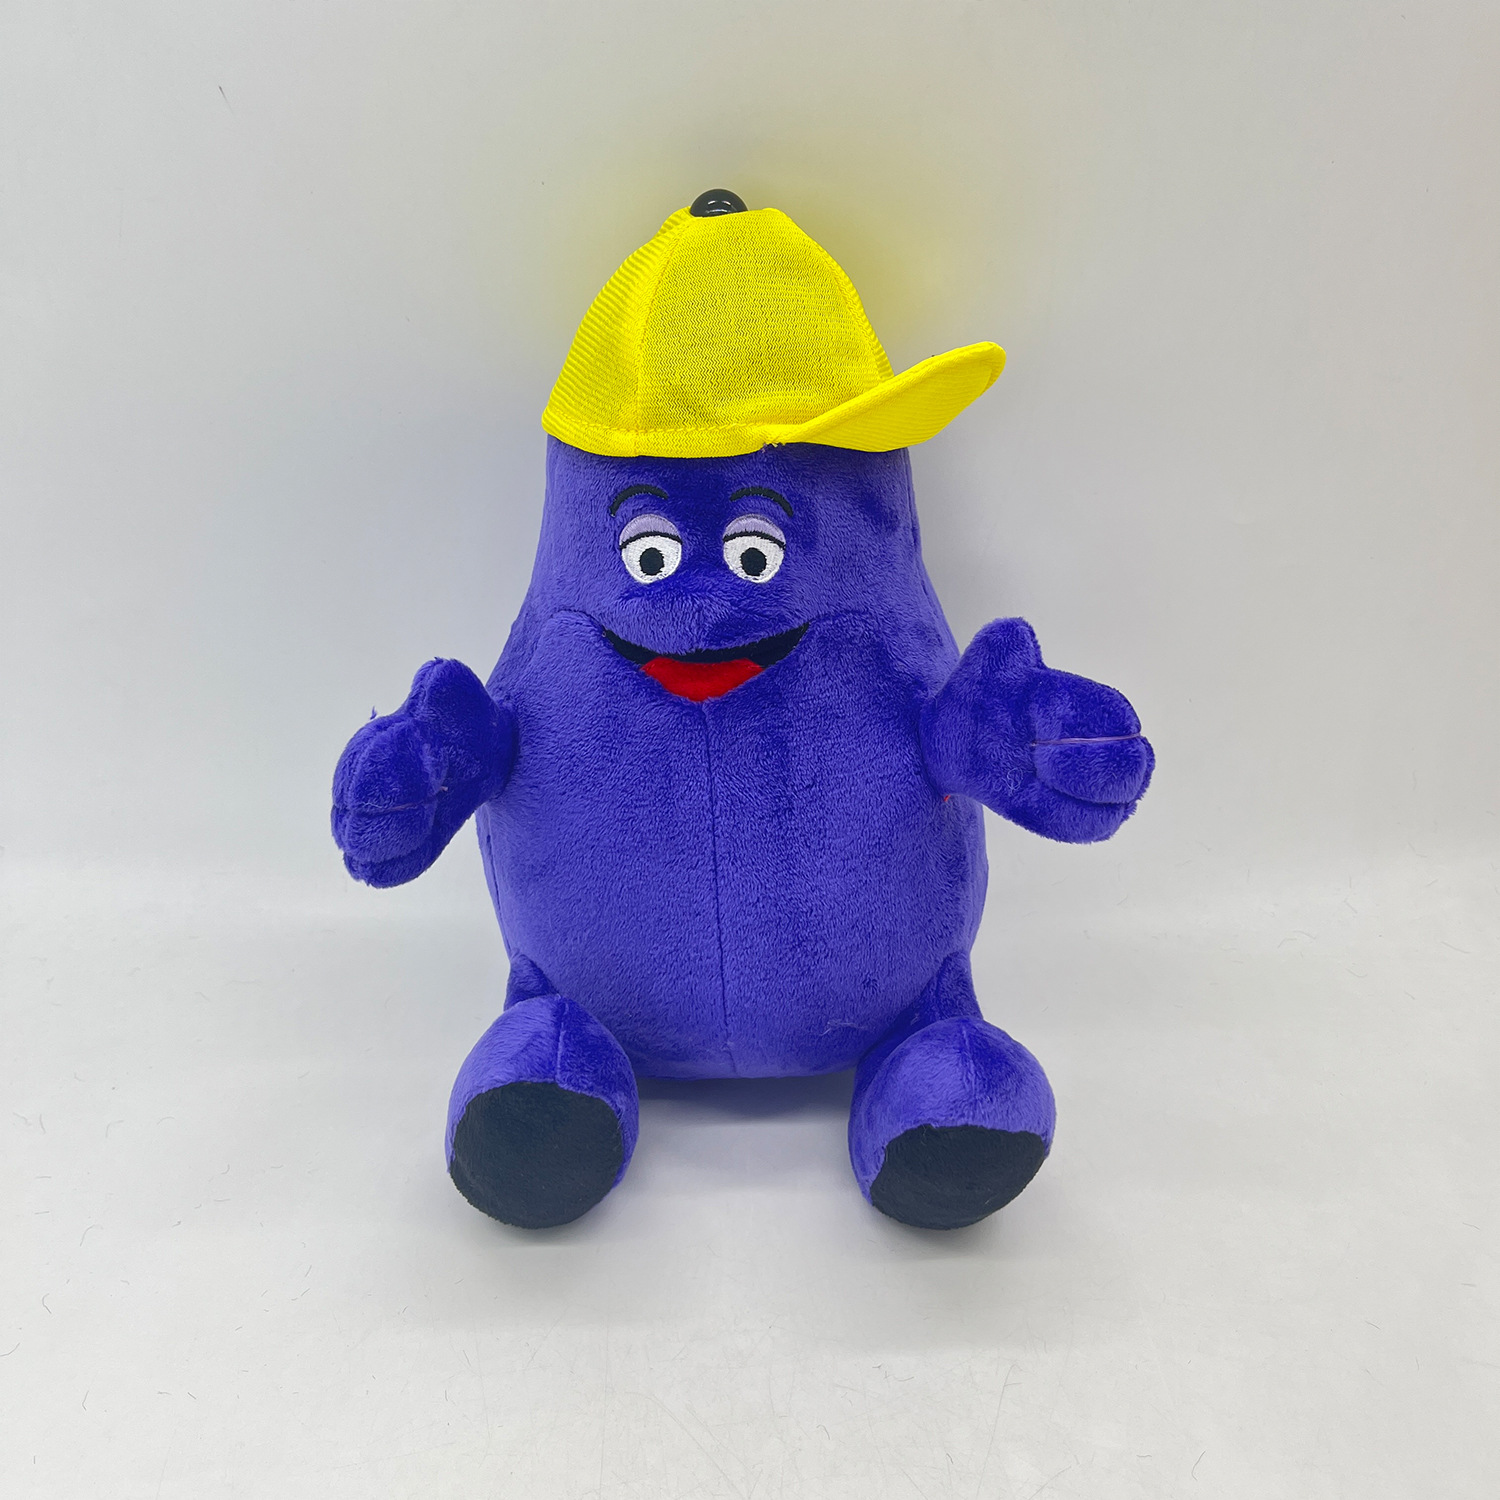 22CM GRIMACE Yellow Hat Plush Toy Purple Eggplant Cartoon Dolls Stuffed Soft Toy Christmas Birthday Gift 1 - Grimace Plush